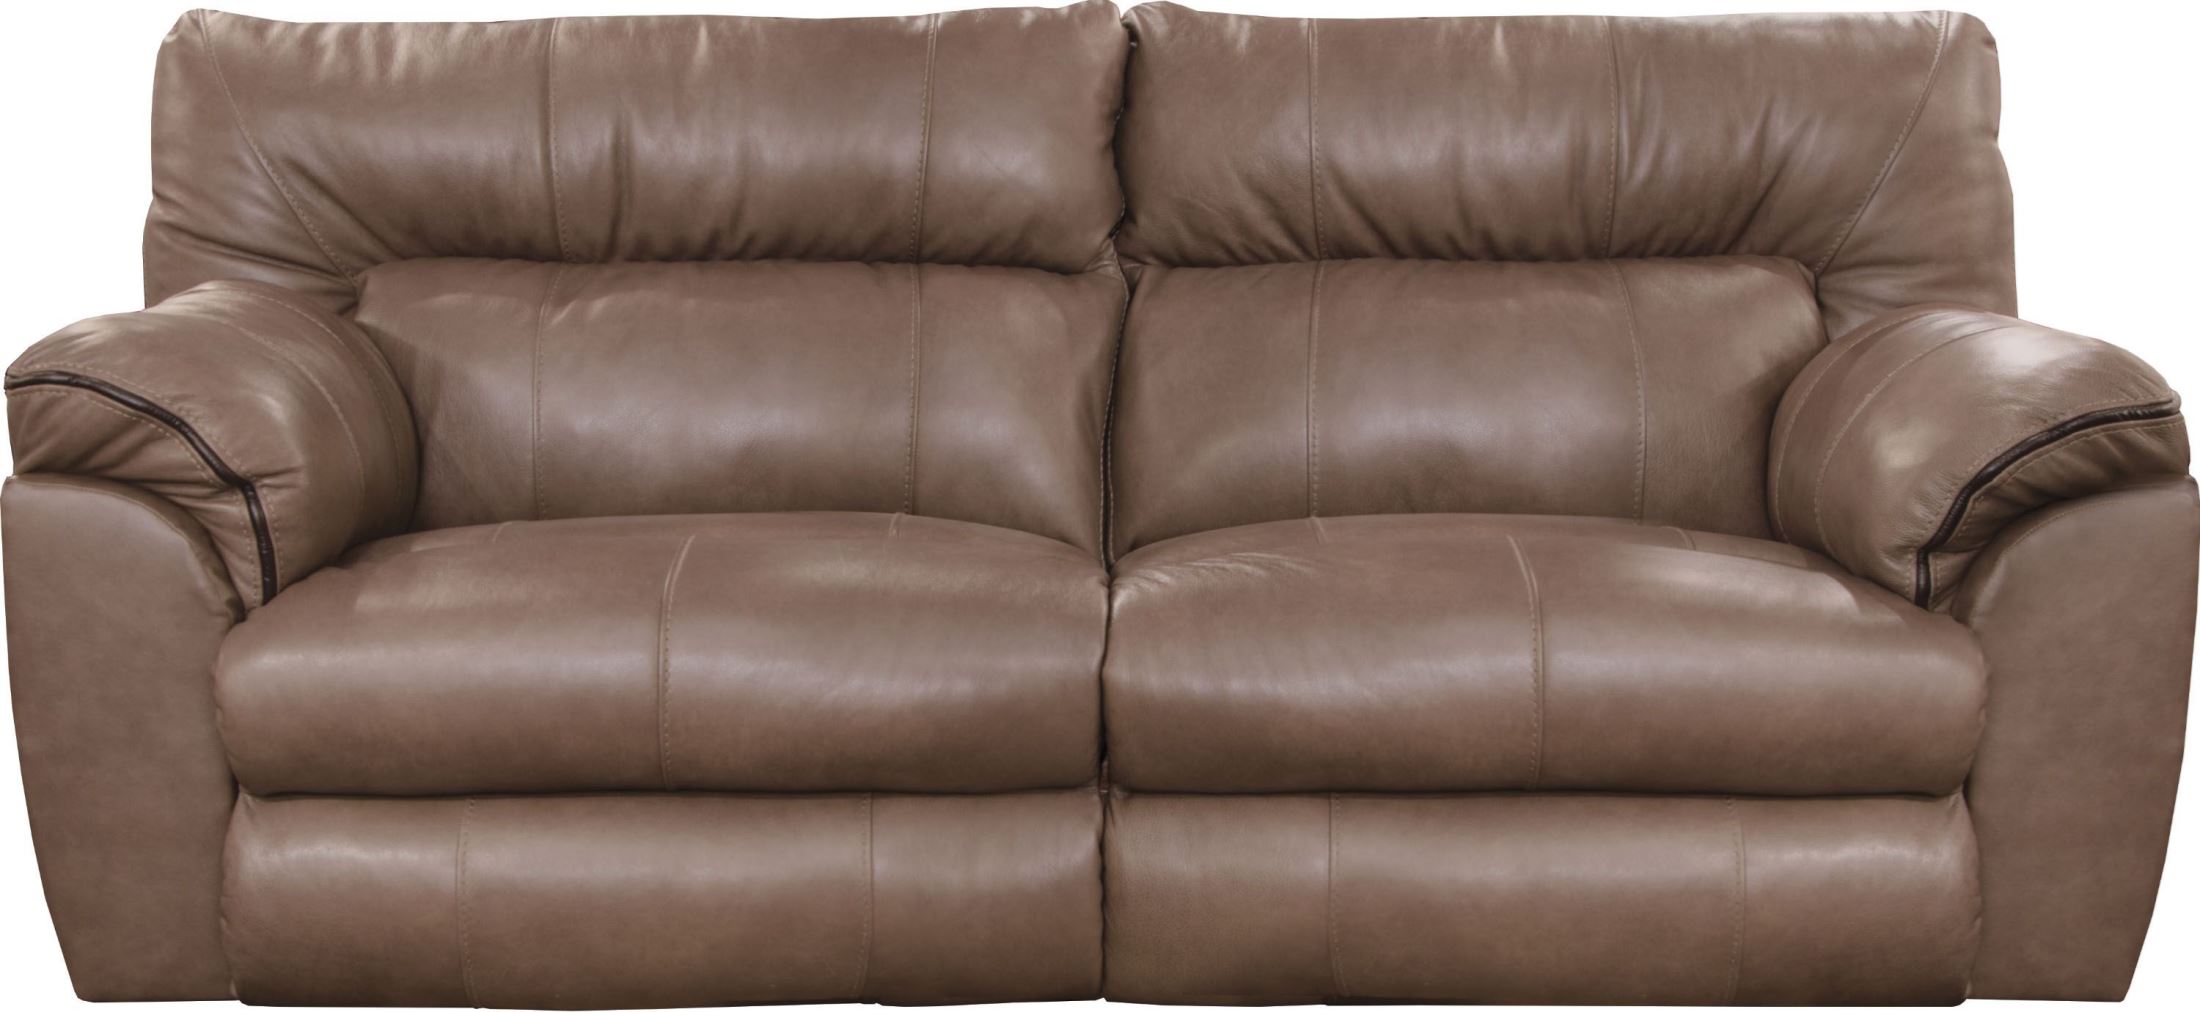 milan italian leather reclining sofa & loveseat